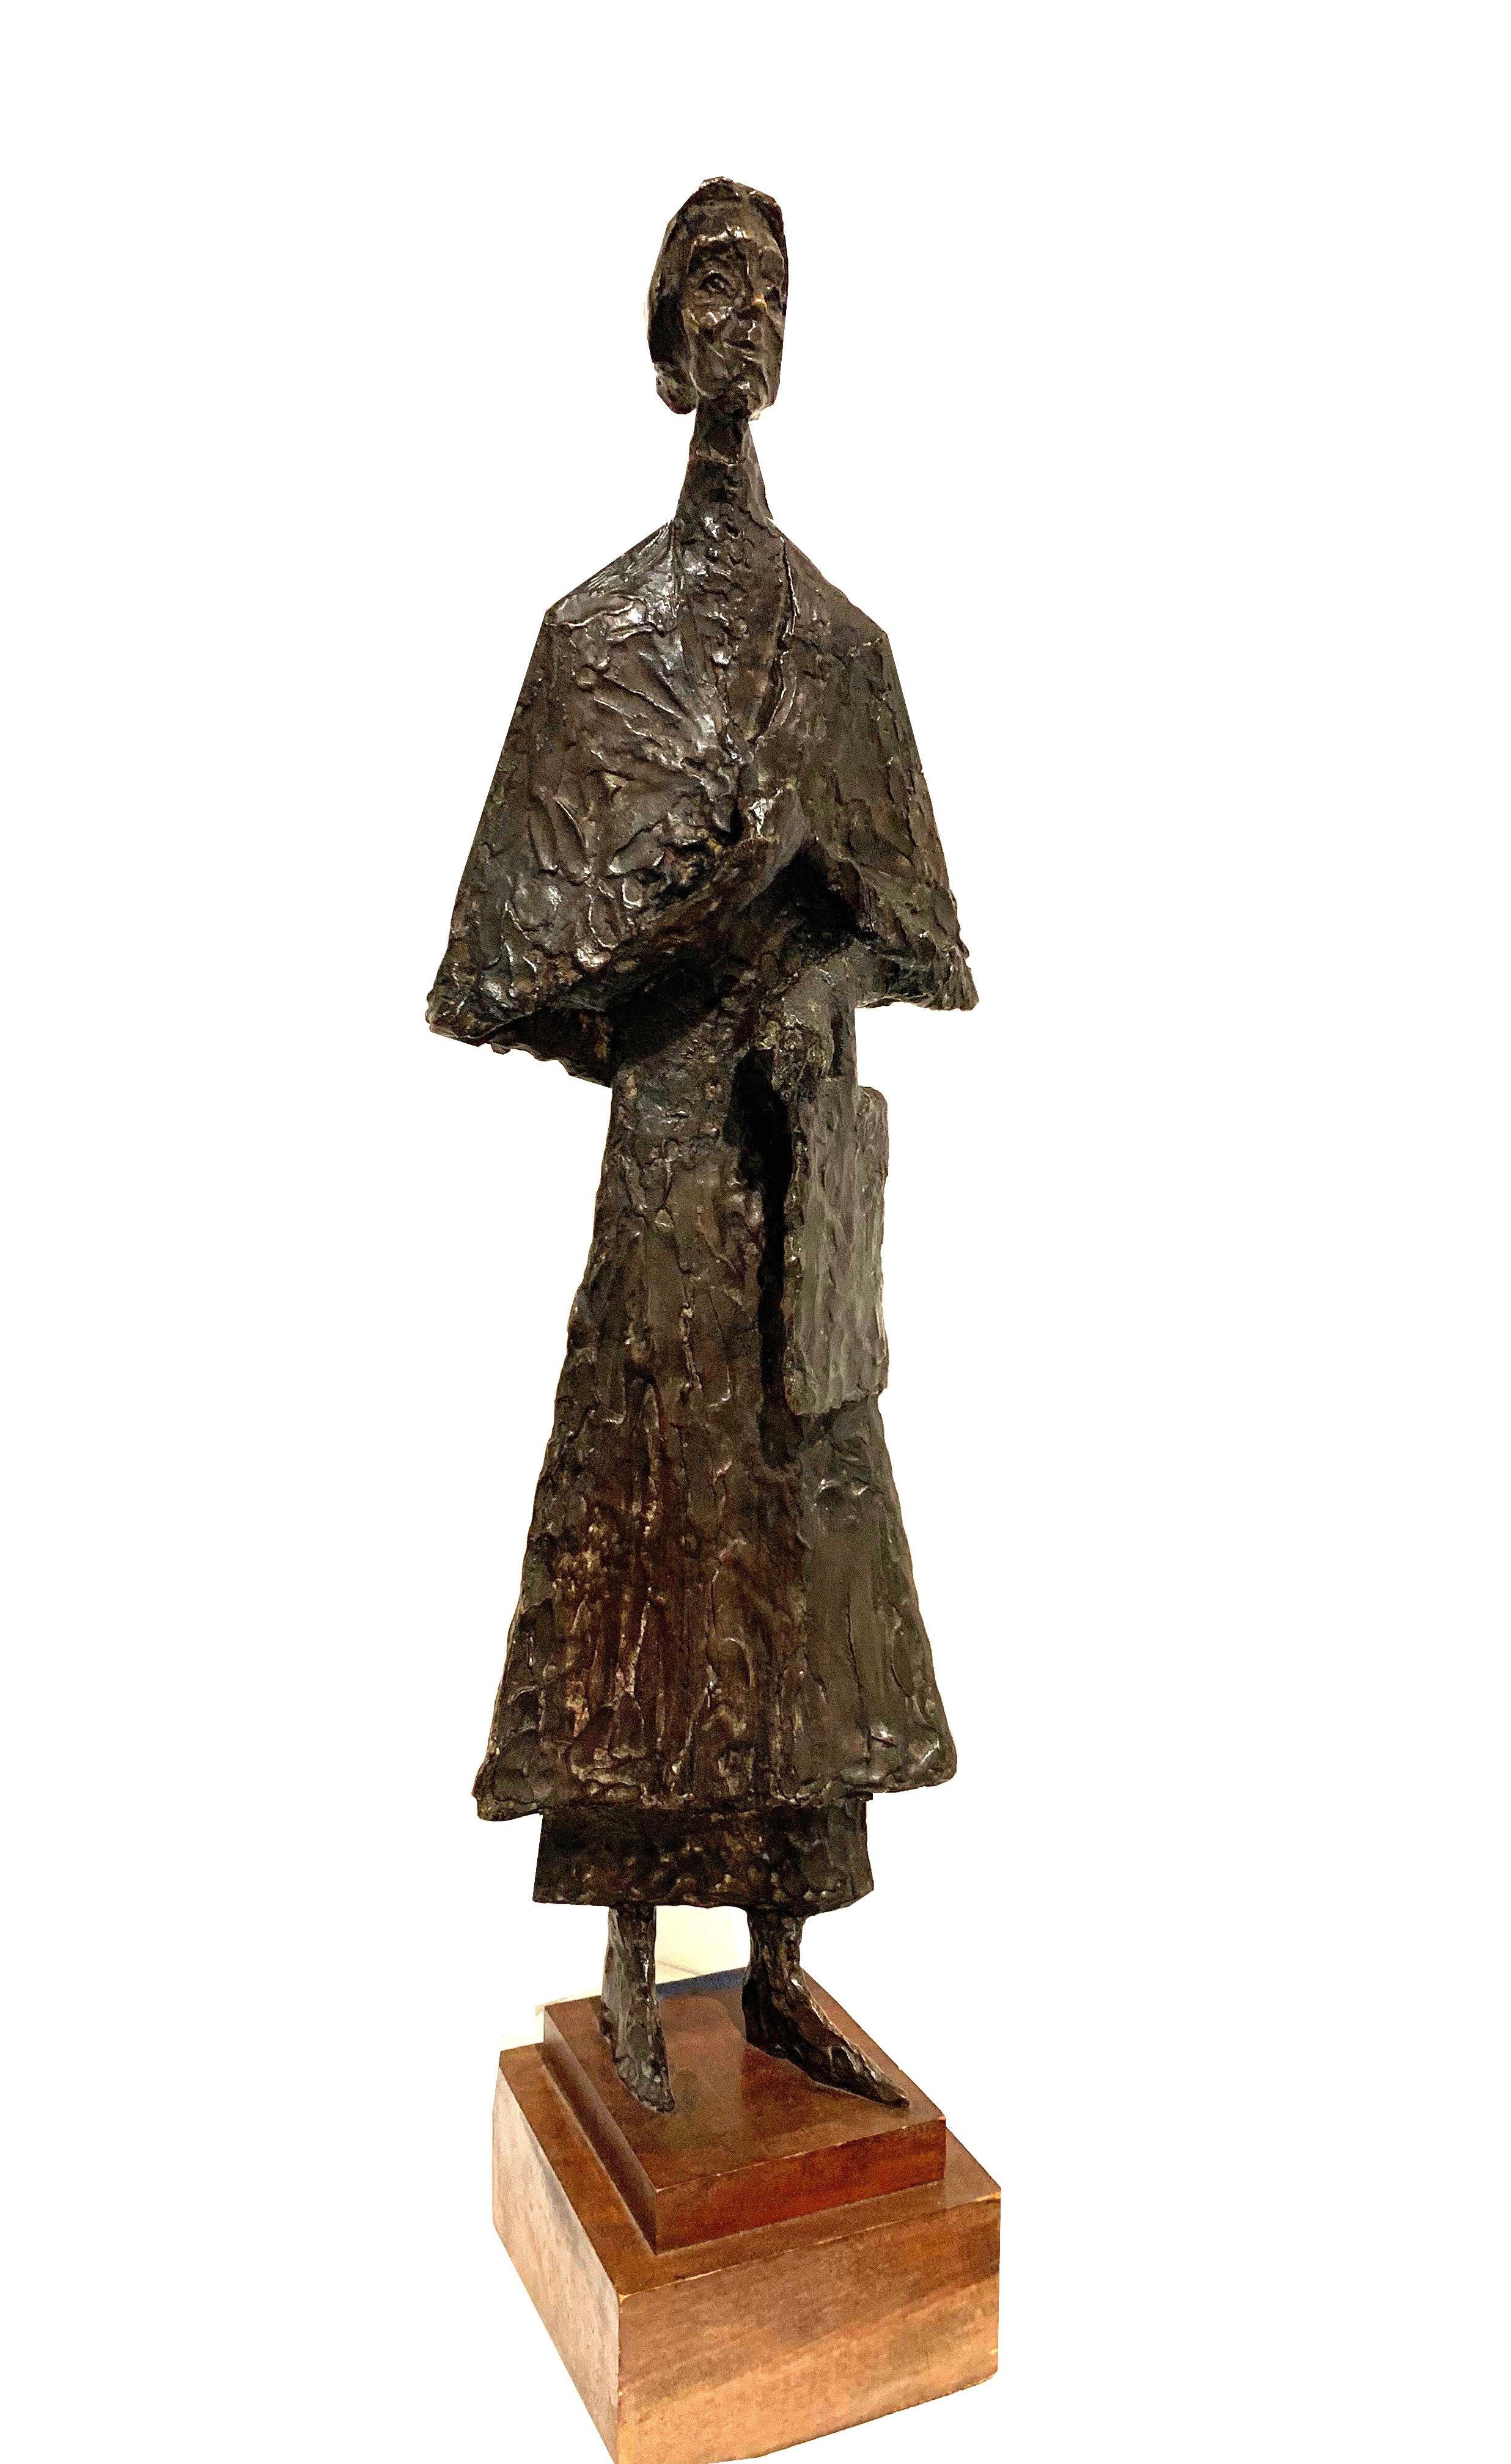 Lily Shore Figurative Sculpture - Bronze Sculpture Standing Woman